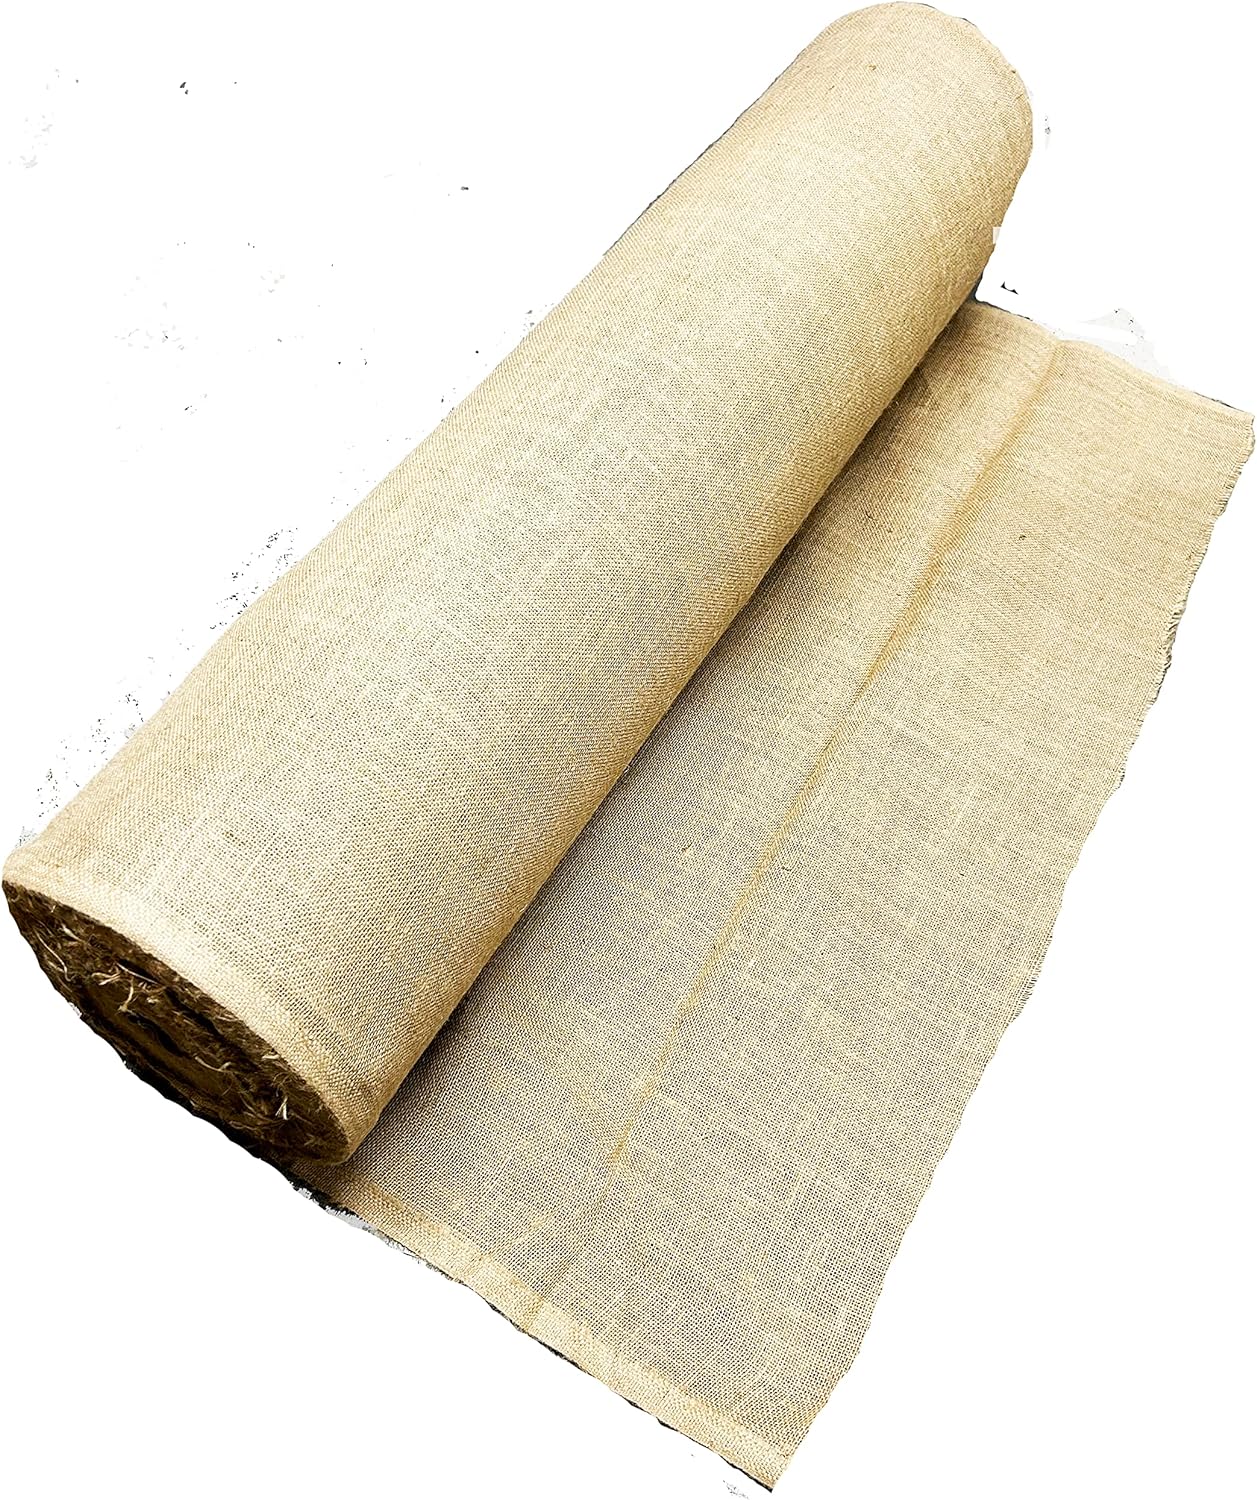 Gardening Burlap Roll - Multipurpose Natural Burlap Fabric